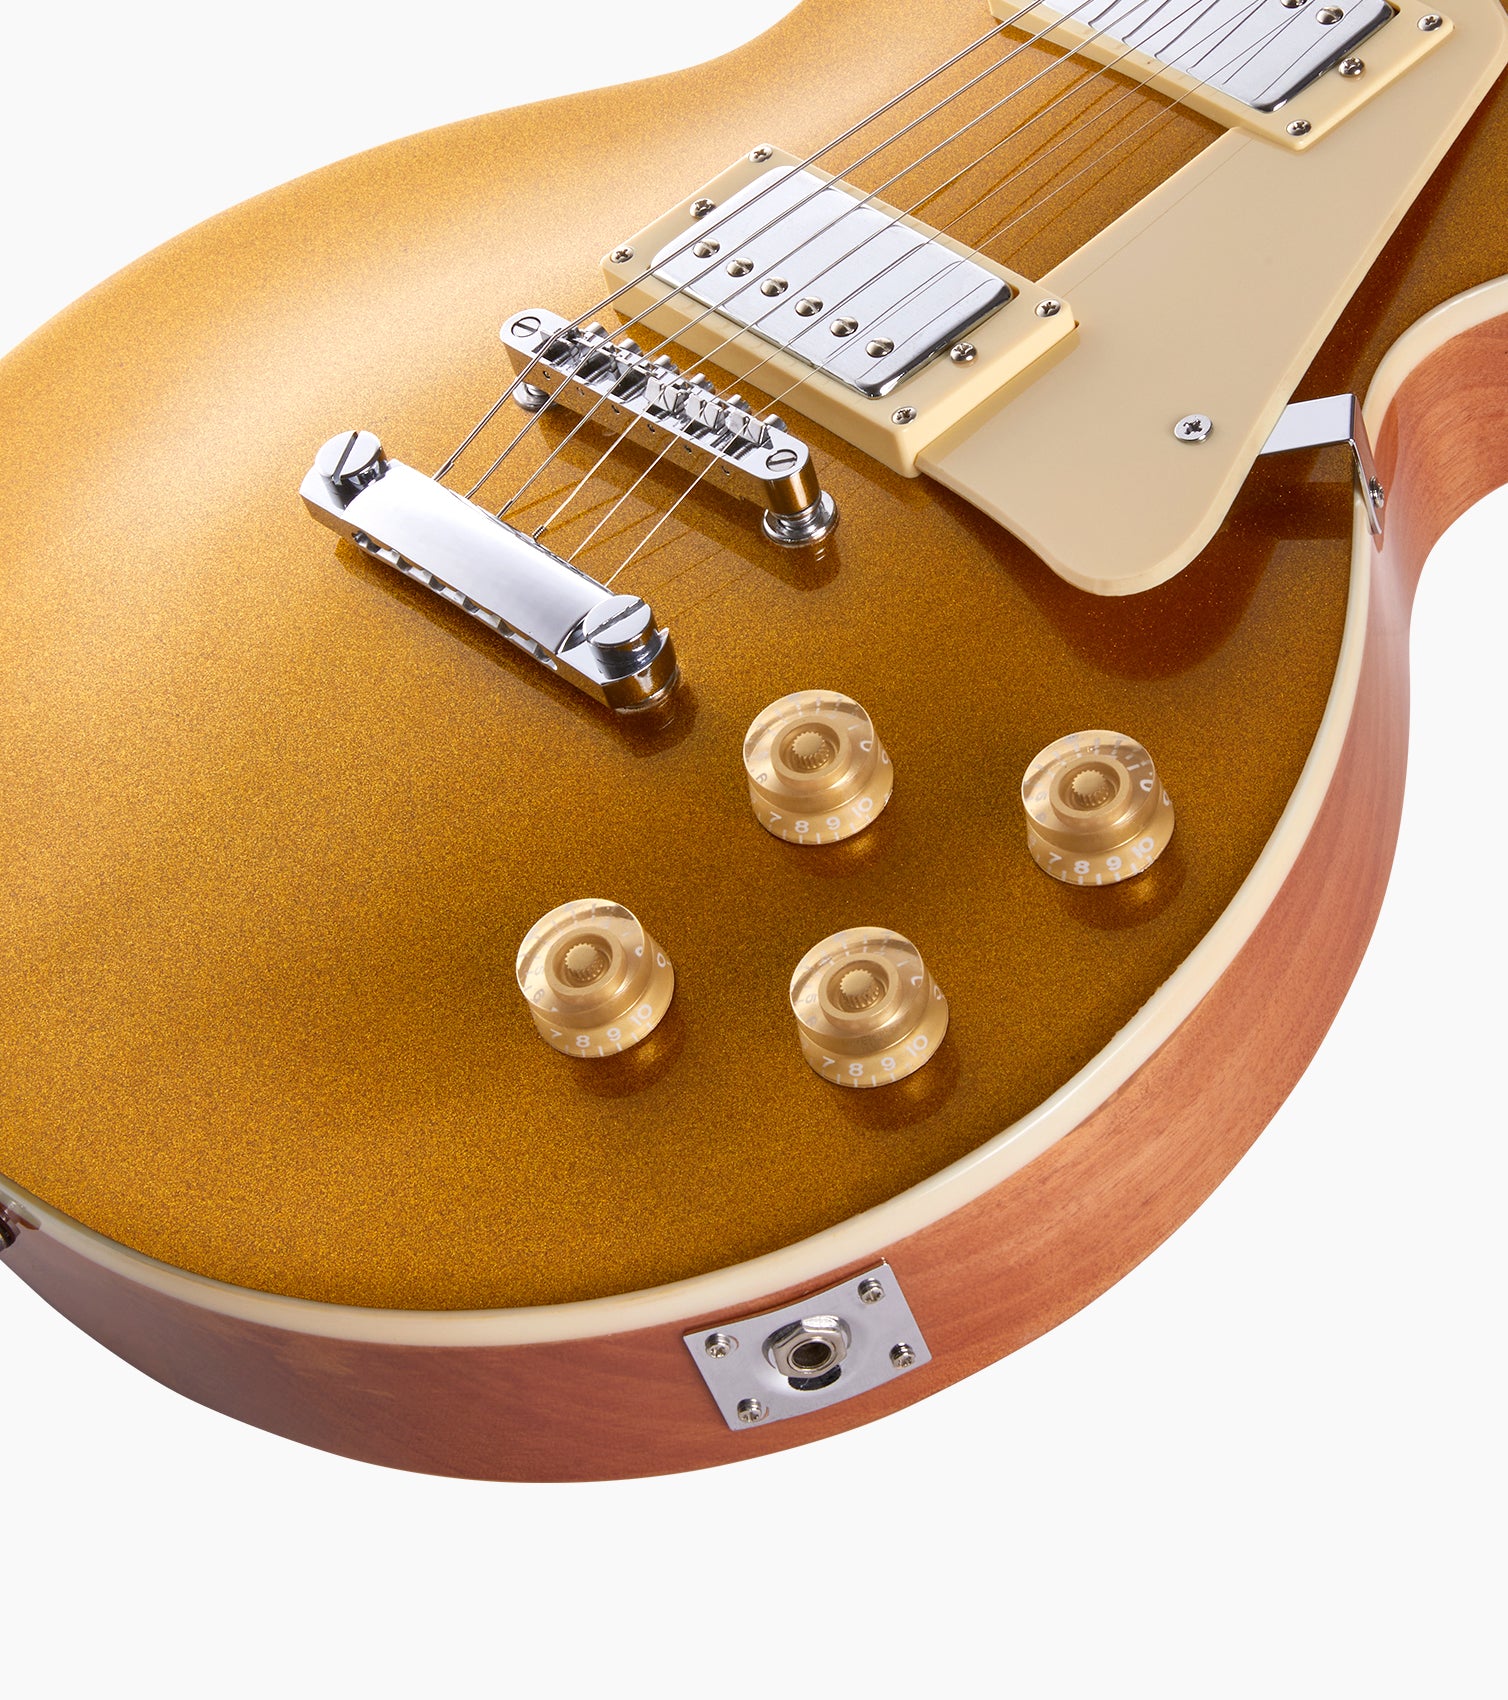 close-up of Honey beginner les paul inspired guitar knobs